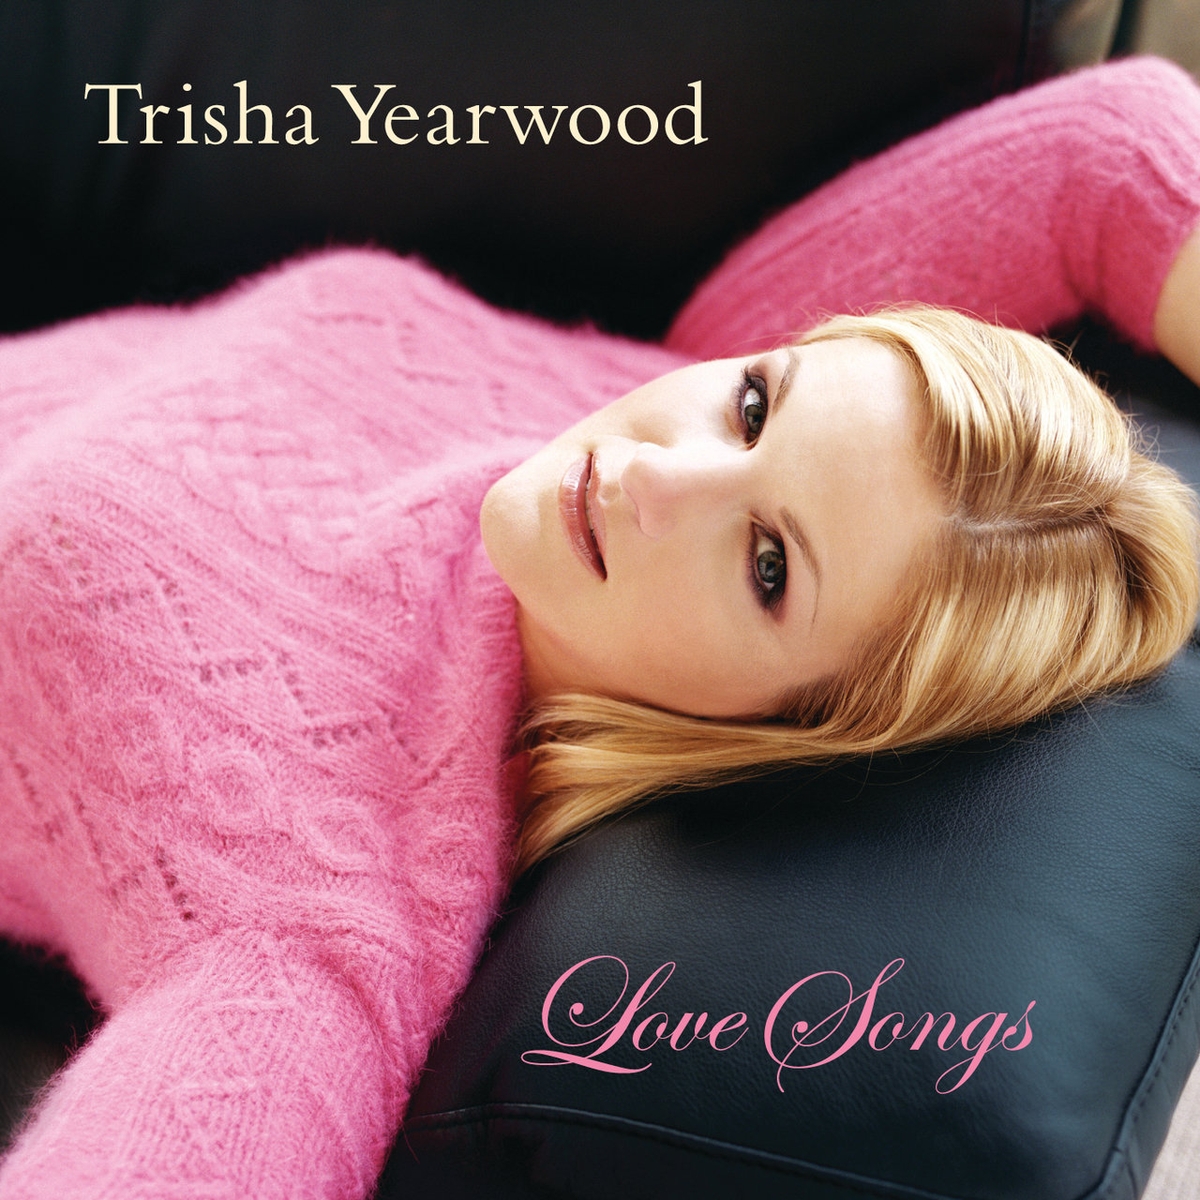 Trish Yearwood Hard Candy Christmad : My Kind Of Christmas Reba Mcentire Album Wikipedia - Ca ...